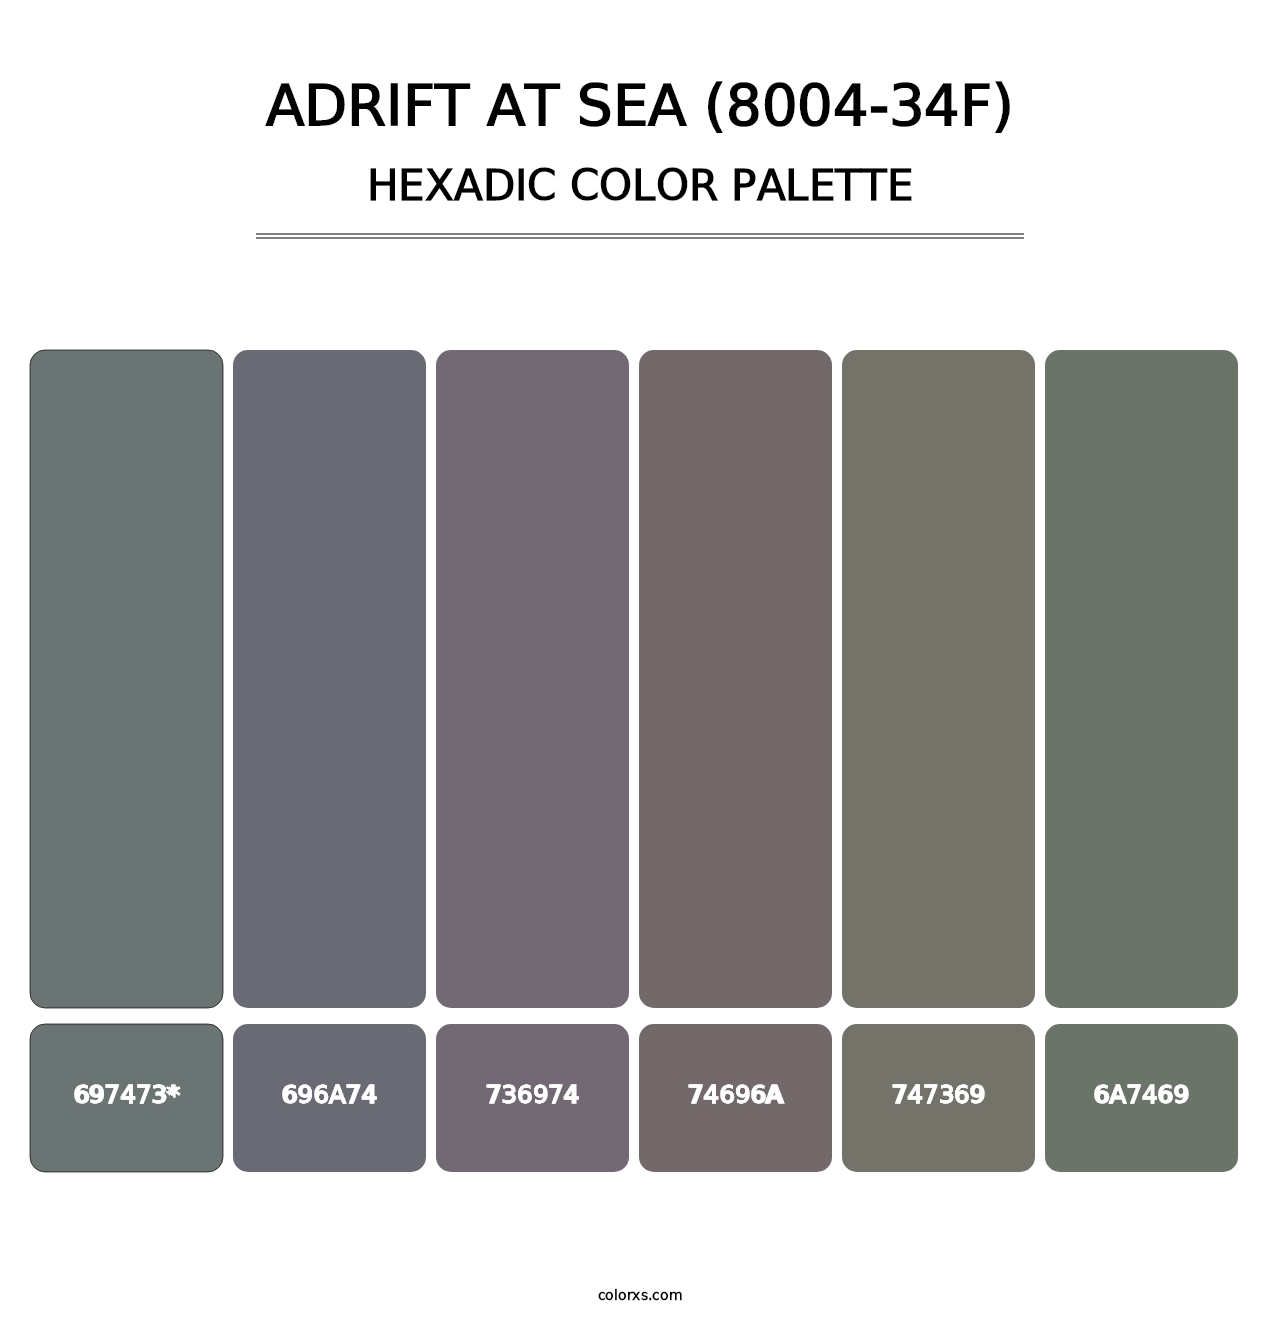 Adrift at Sea (8004-34F) - Hexadic Color Palette